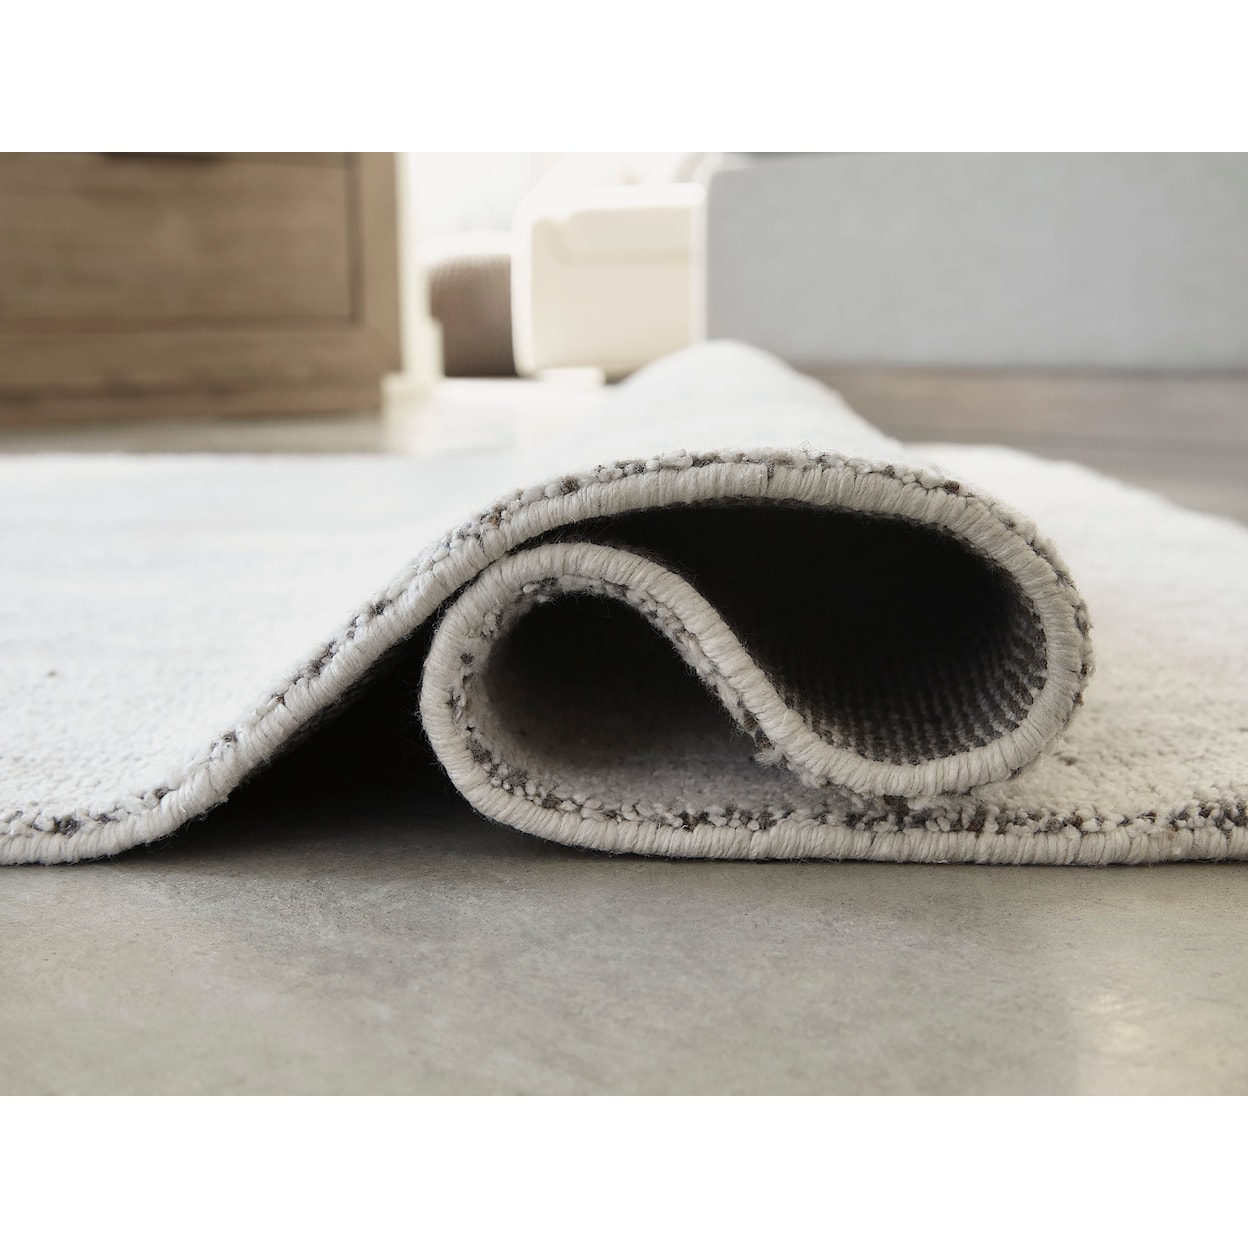 Ashley Furniture Signature Design Contemporary Area Rugs Lenlett Ivory/Charcoal Large Rug